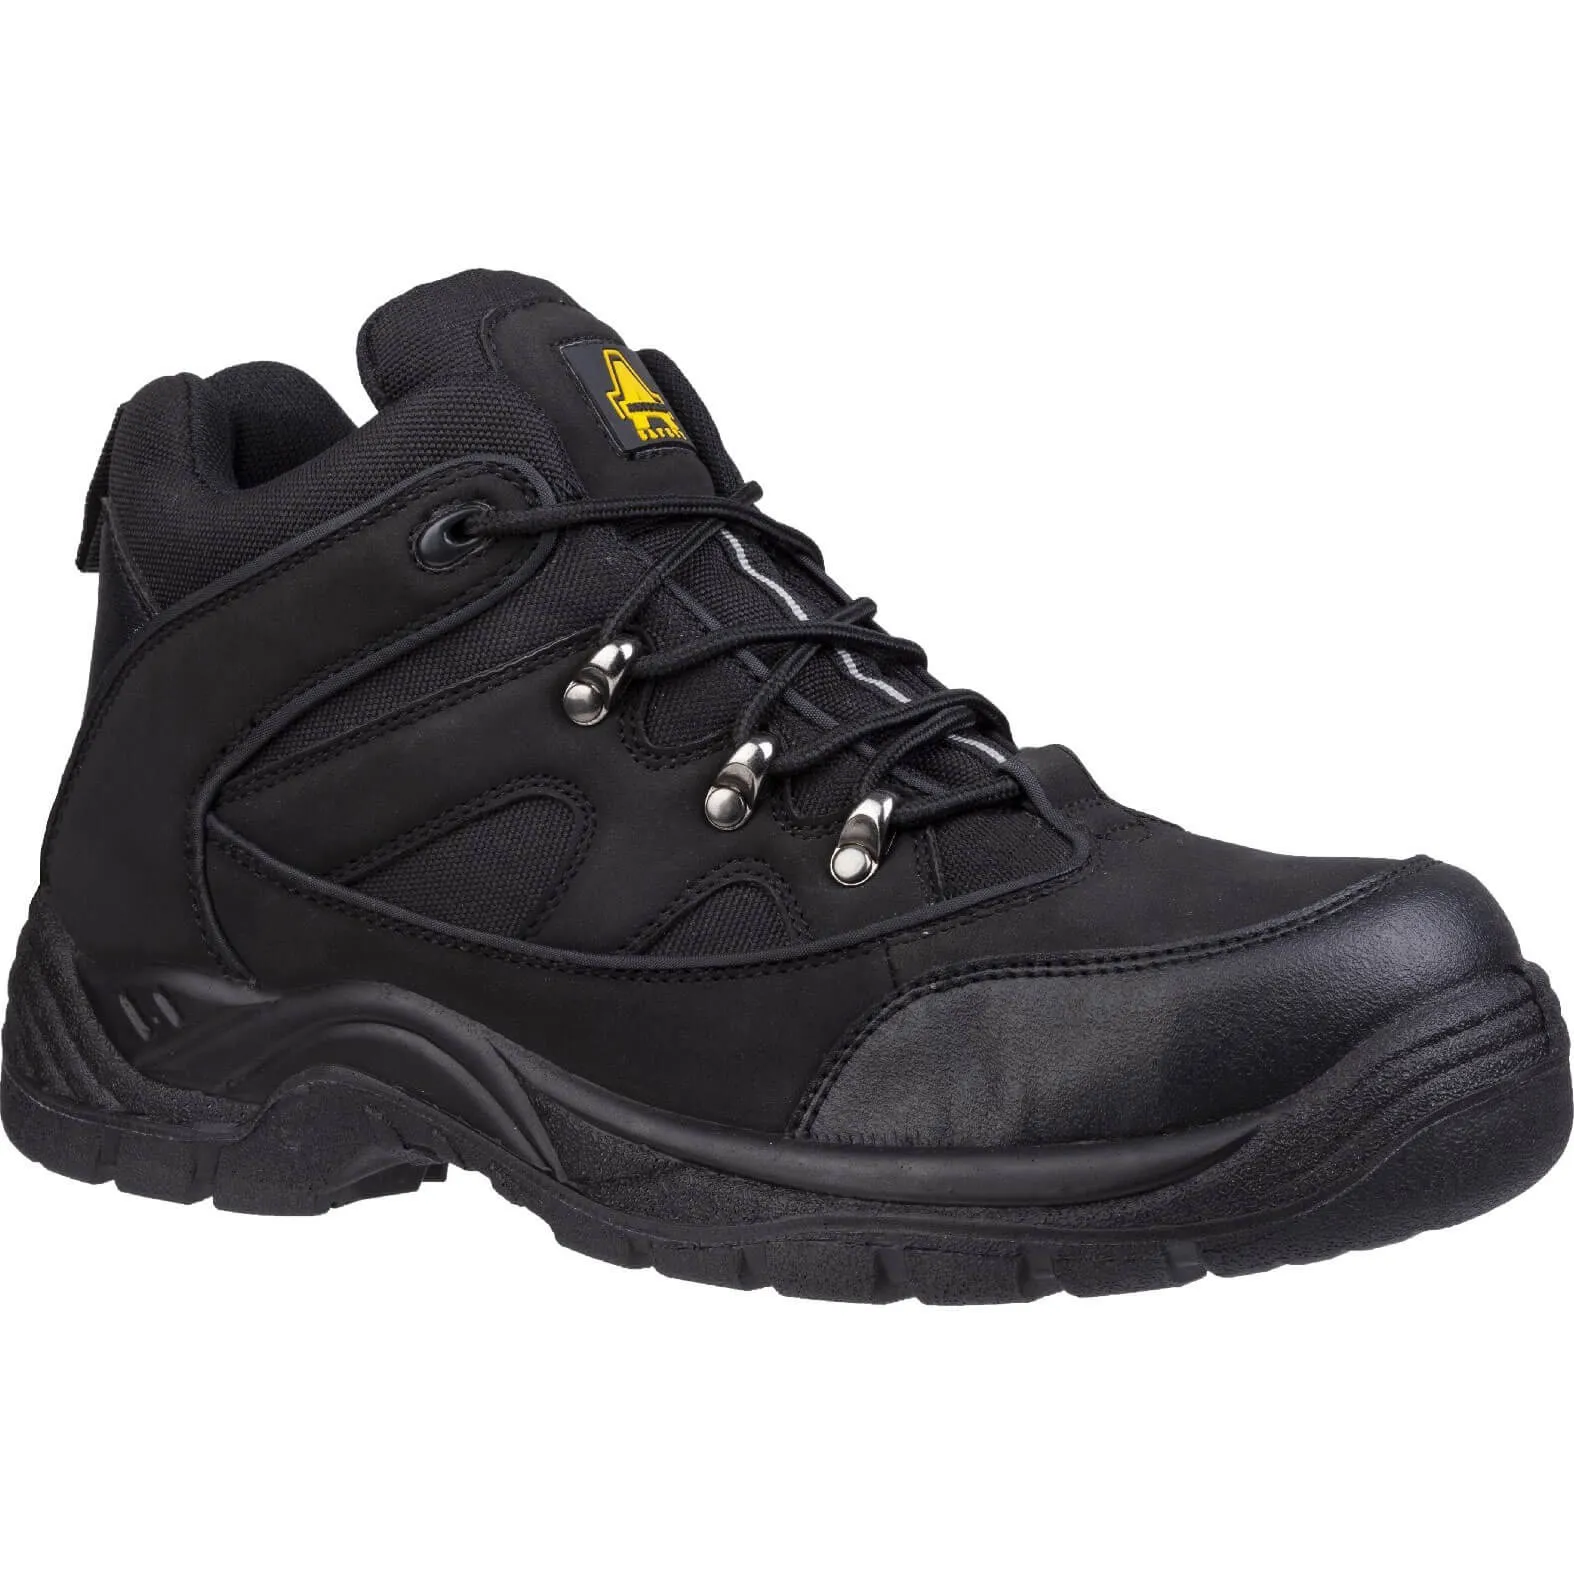 Amblers Mens Safety FS151 Vegan Friendly Safety Boots - Black, Size 9